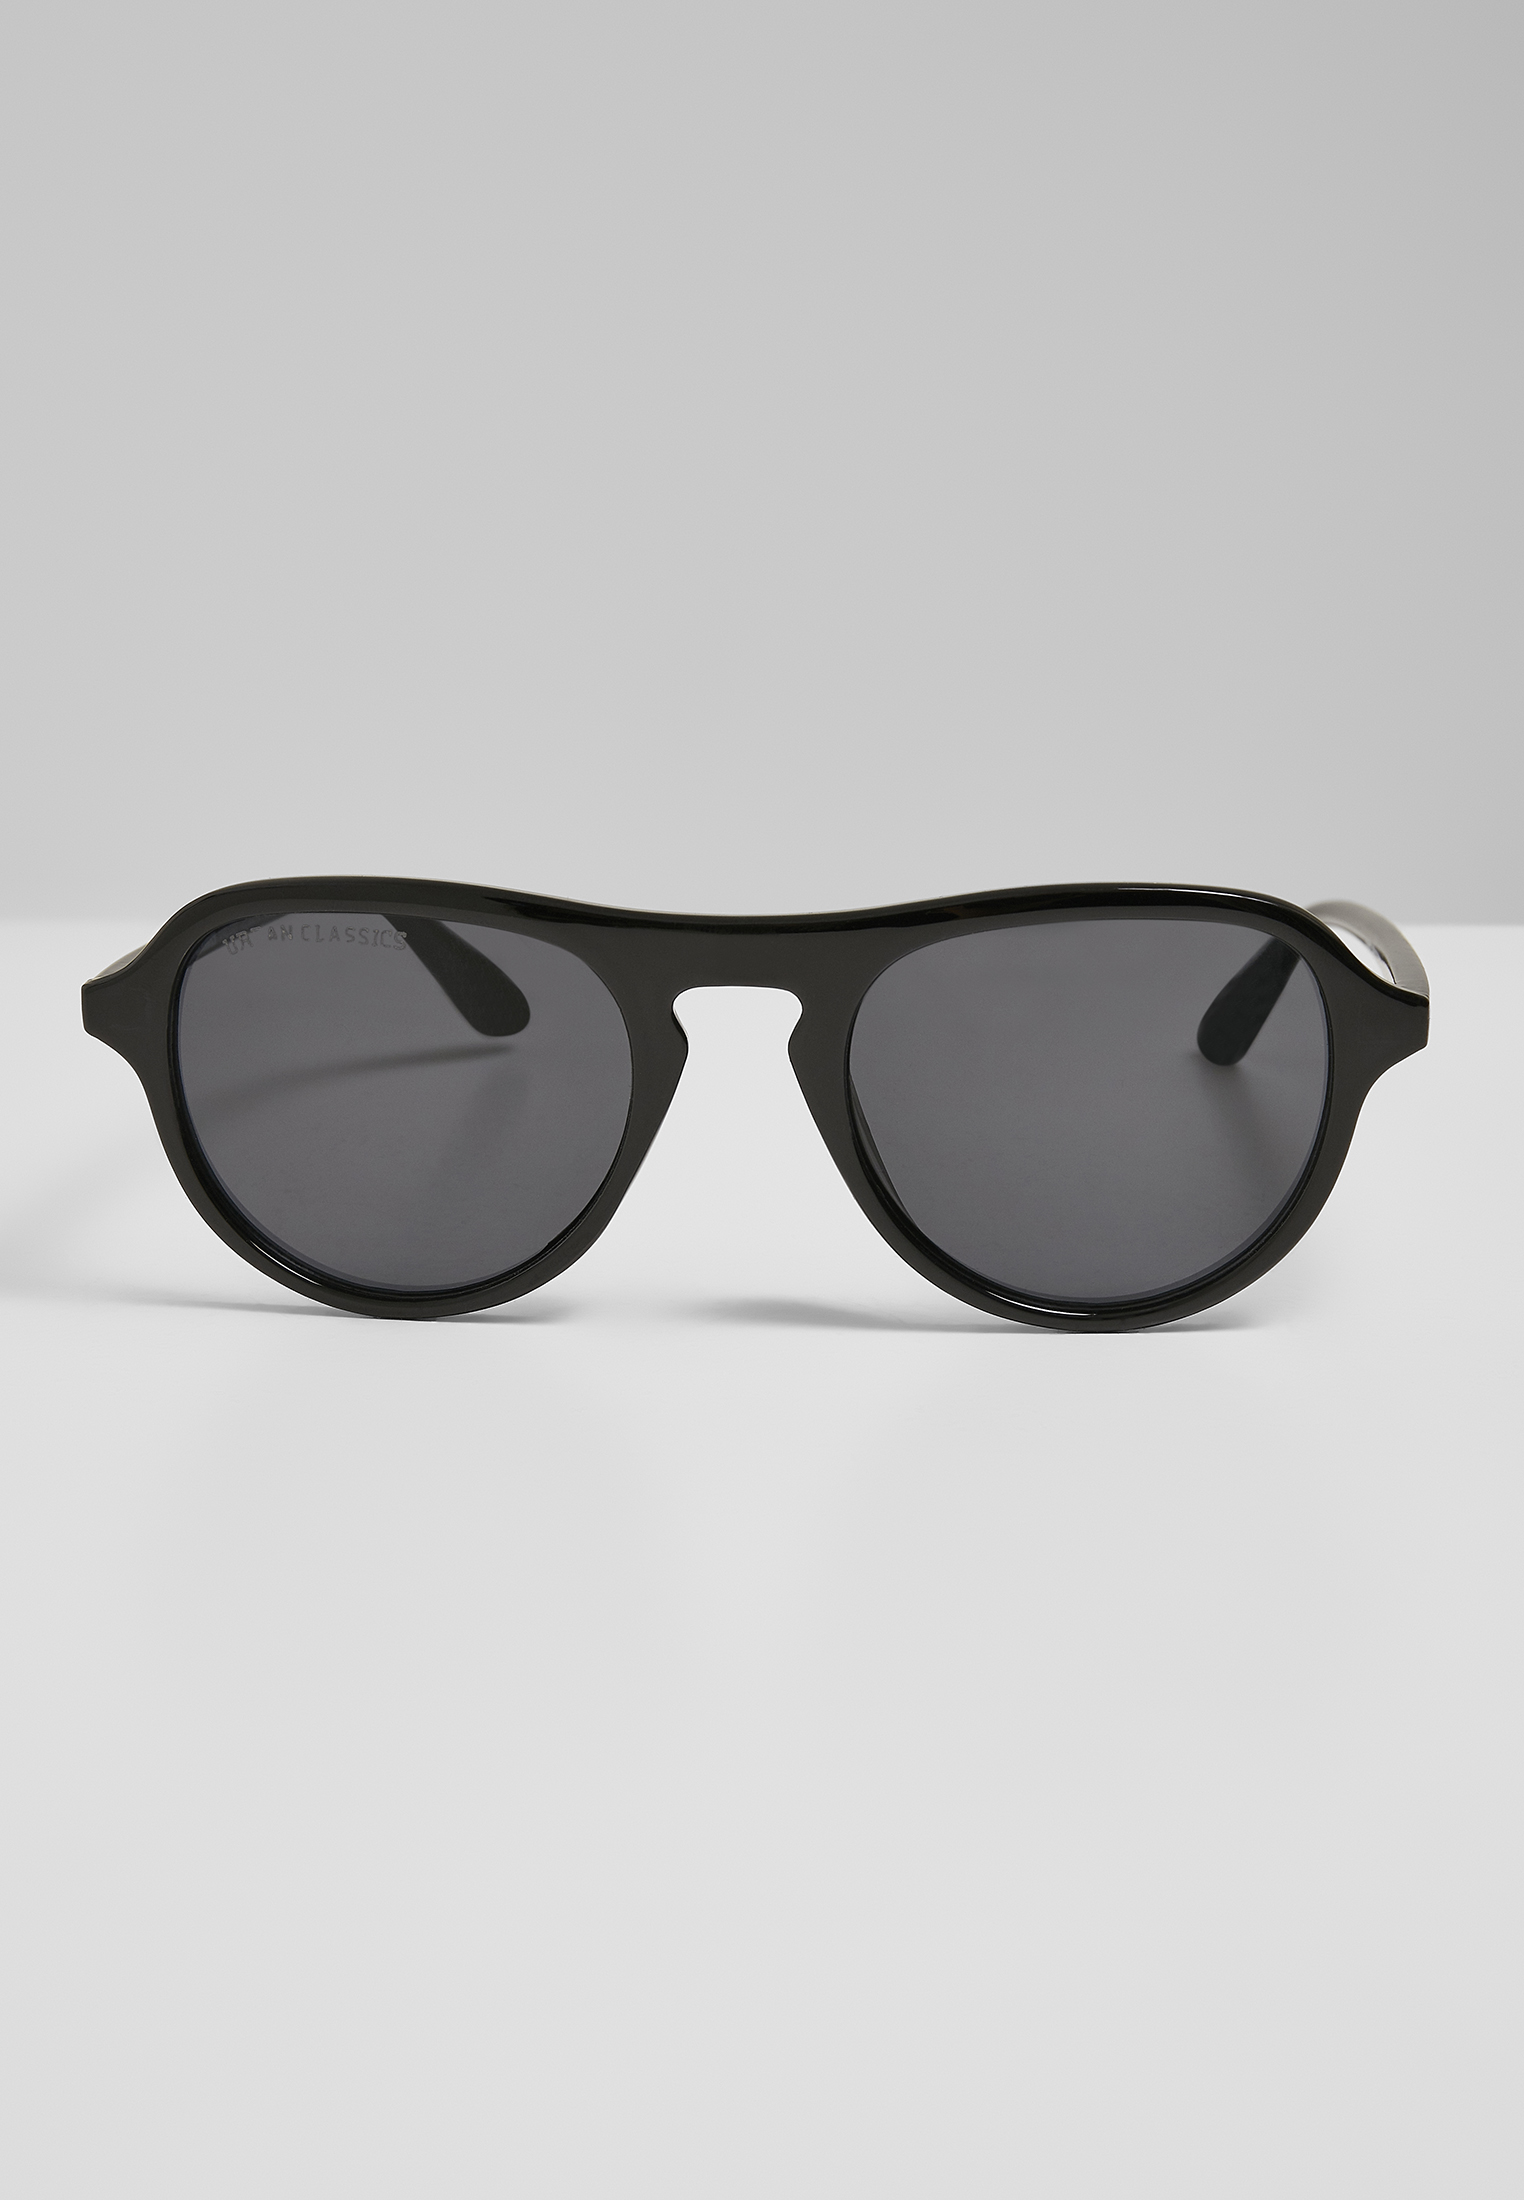 Sonnenbrillen Sunglasses Kalimantan 3-Pack in Farbe brown/grey/black